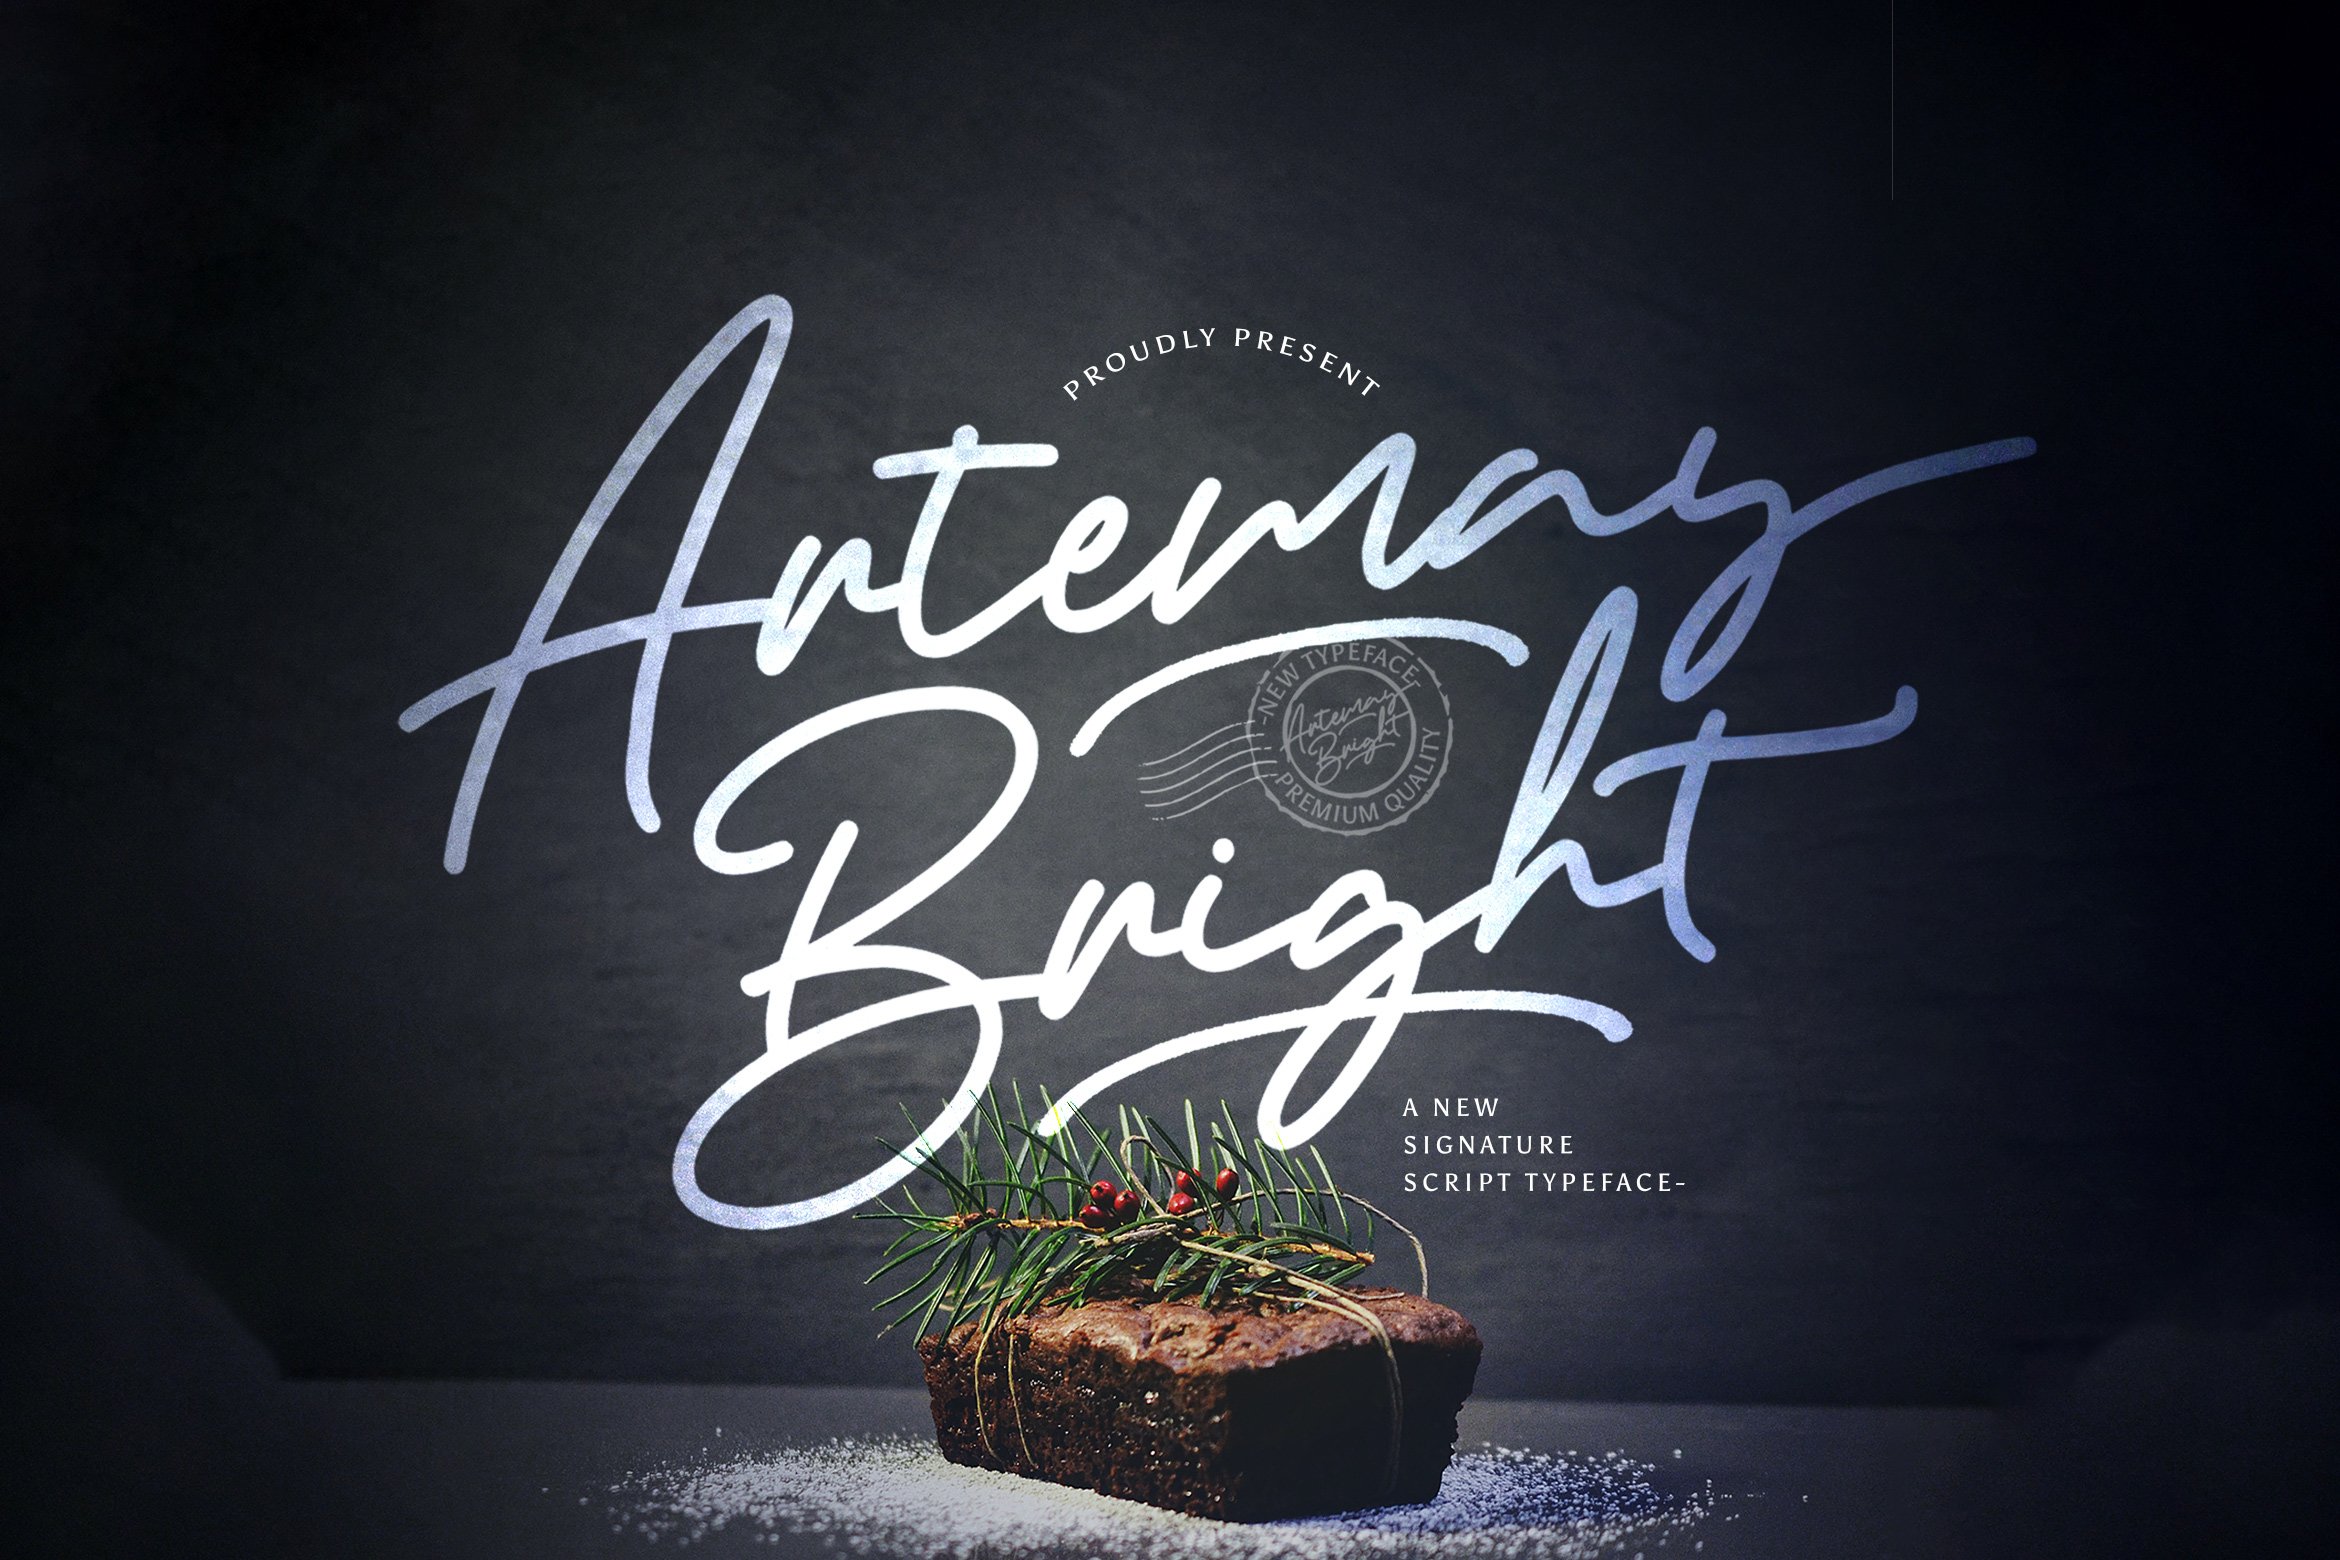 Artemay Bright - Signature Script Fo cover image.